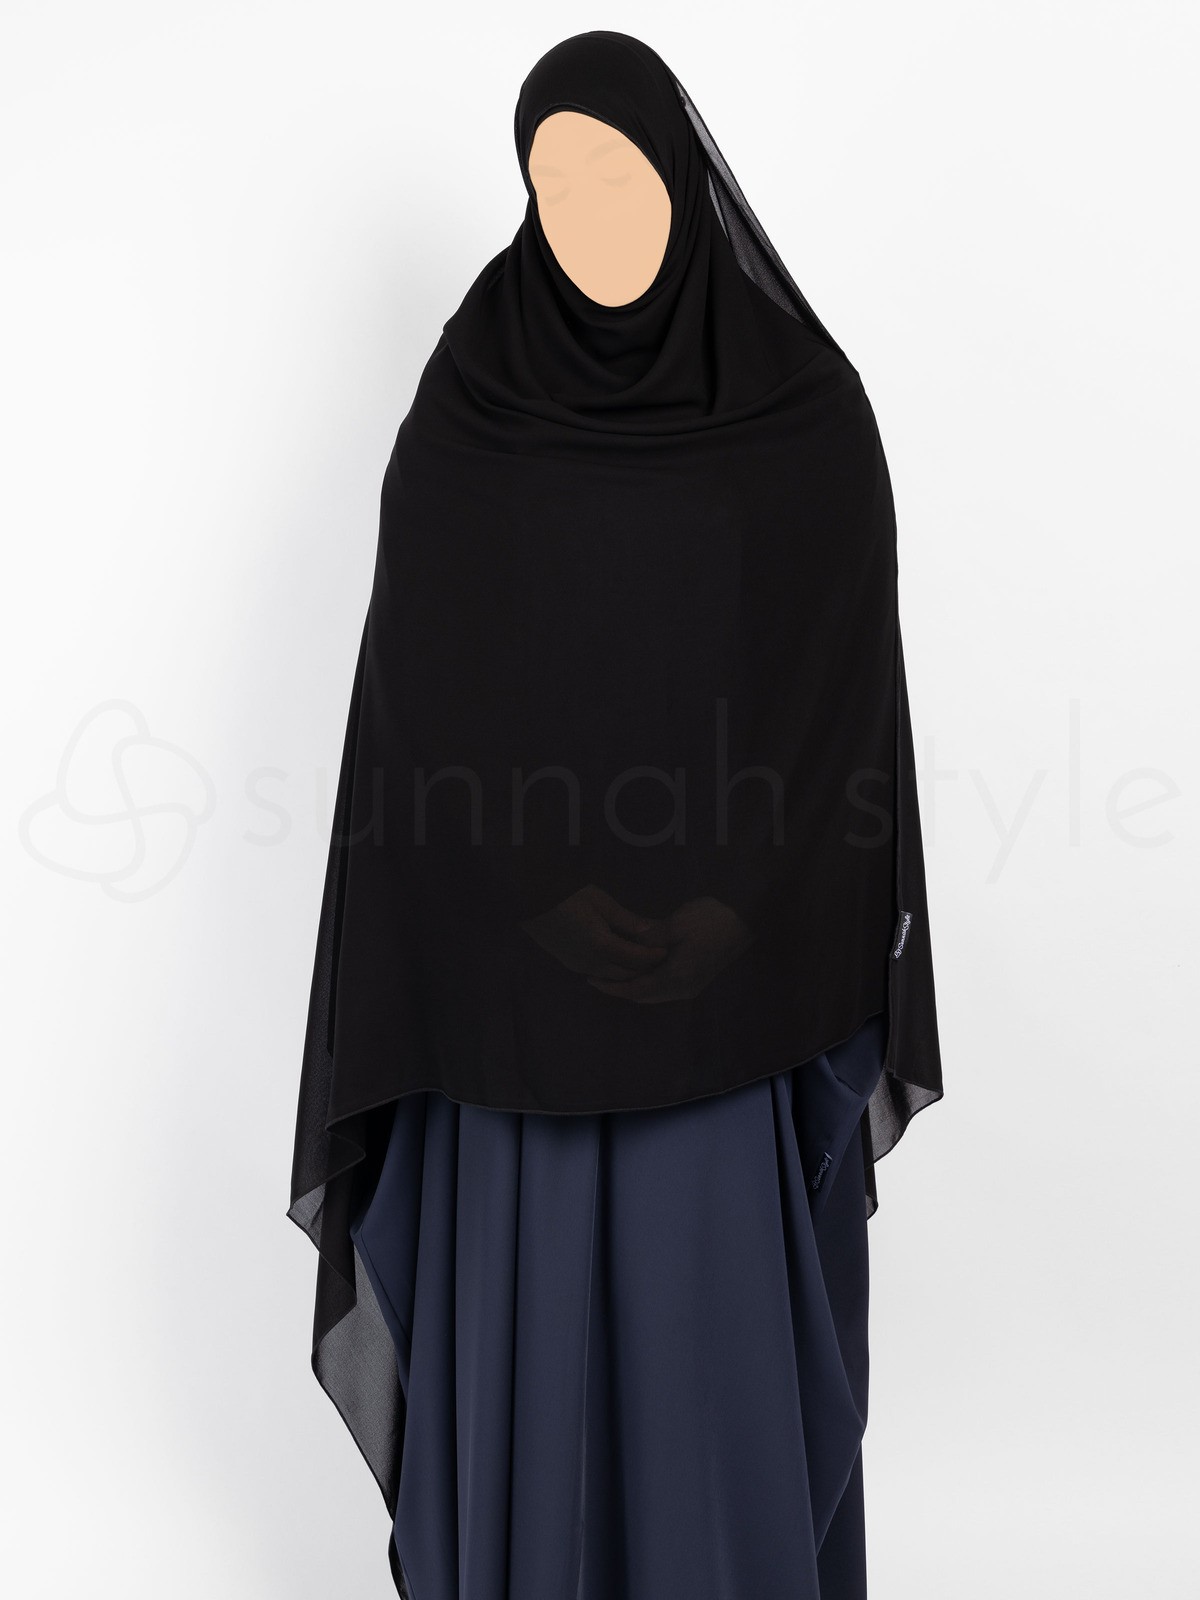 Sunnah Style - Essentials Shayla (Premium Chiffon) - XXL (Black)